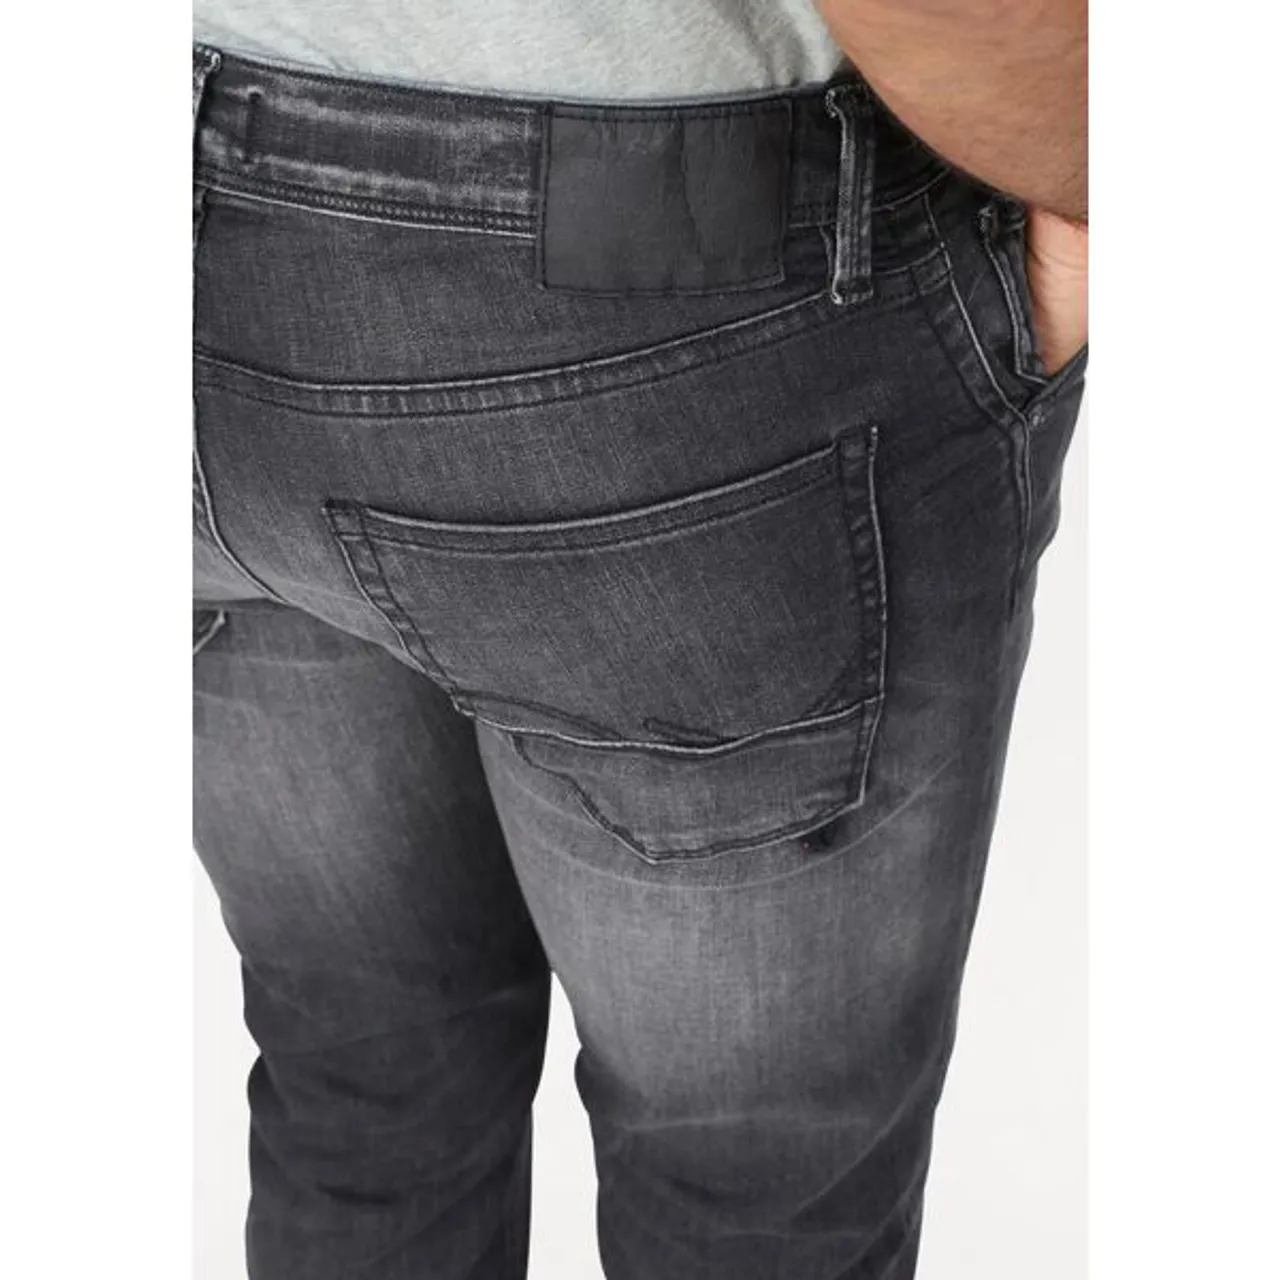 Slim-fit-Jeans JACK & JONES "Glenn" Gr. 31, Länge 34, schwarz (black denim) Herren Jeans Slim Fit